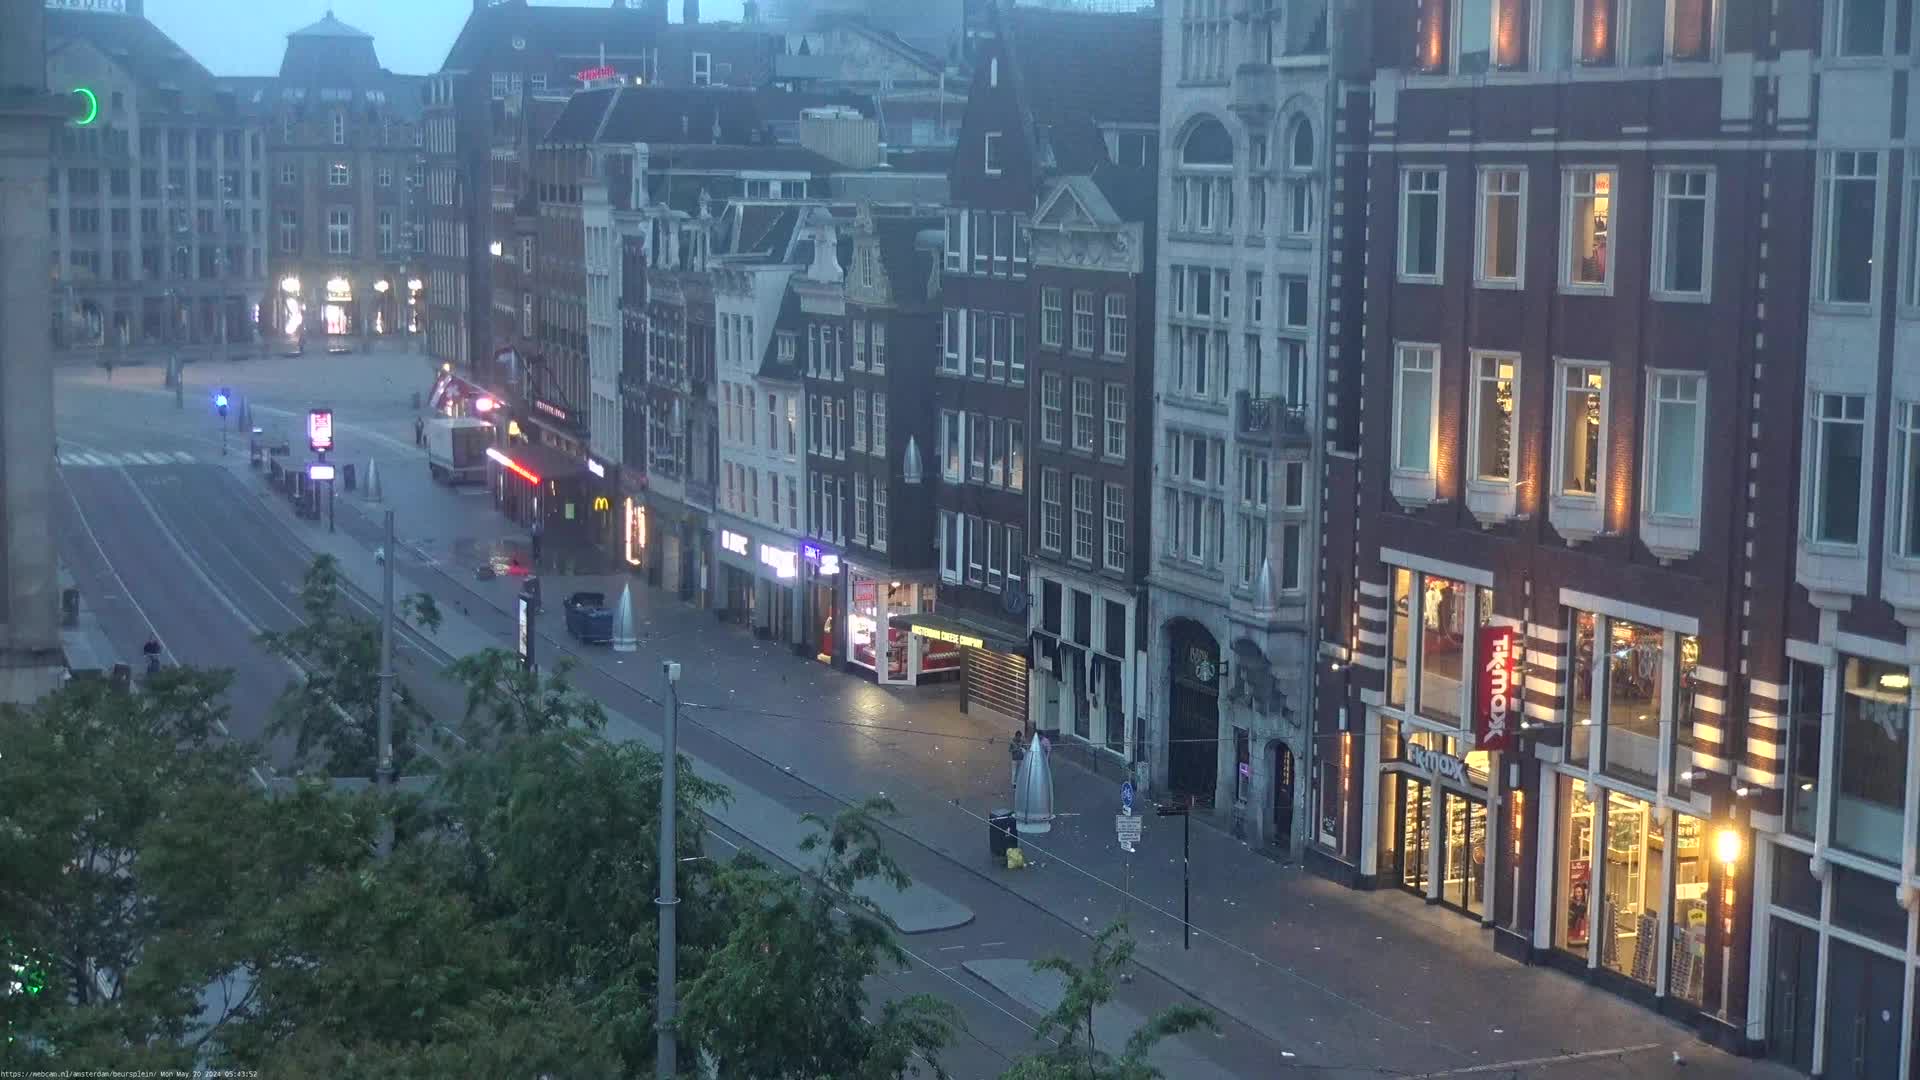 Amsterdam Ma. 06:03